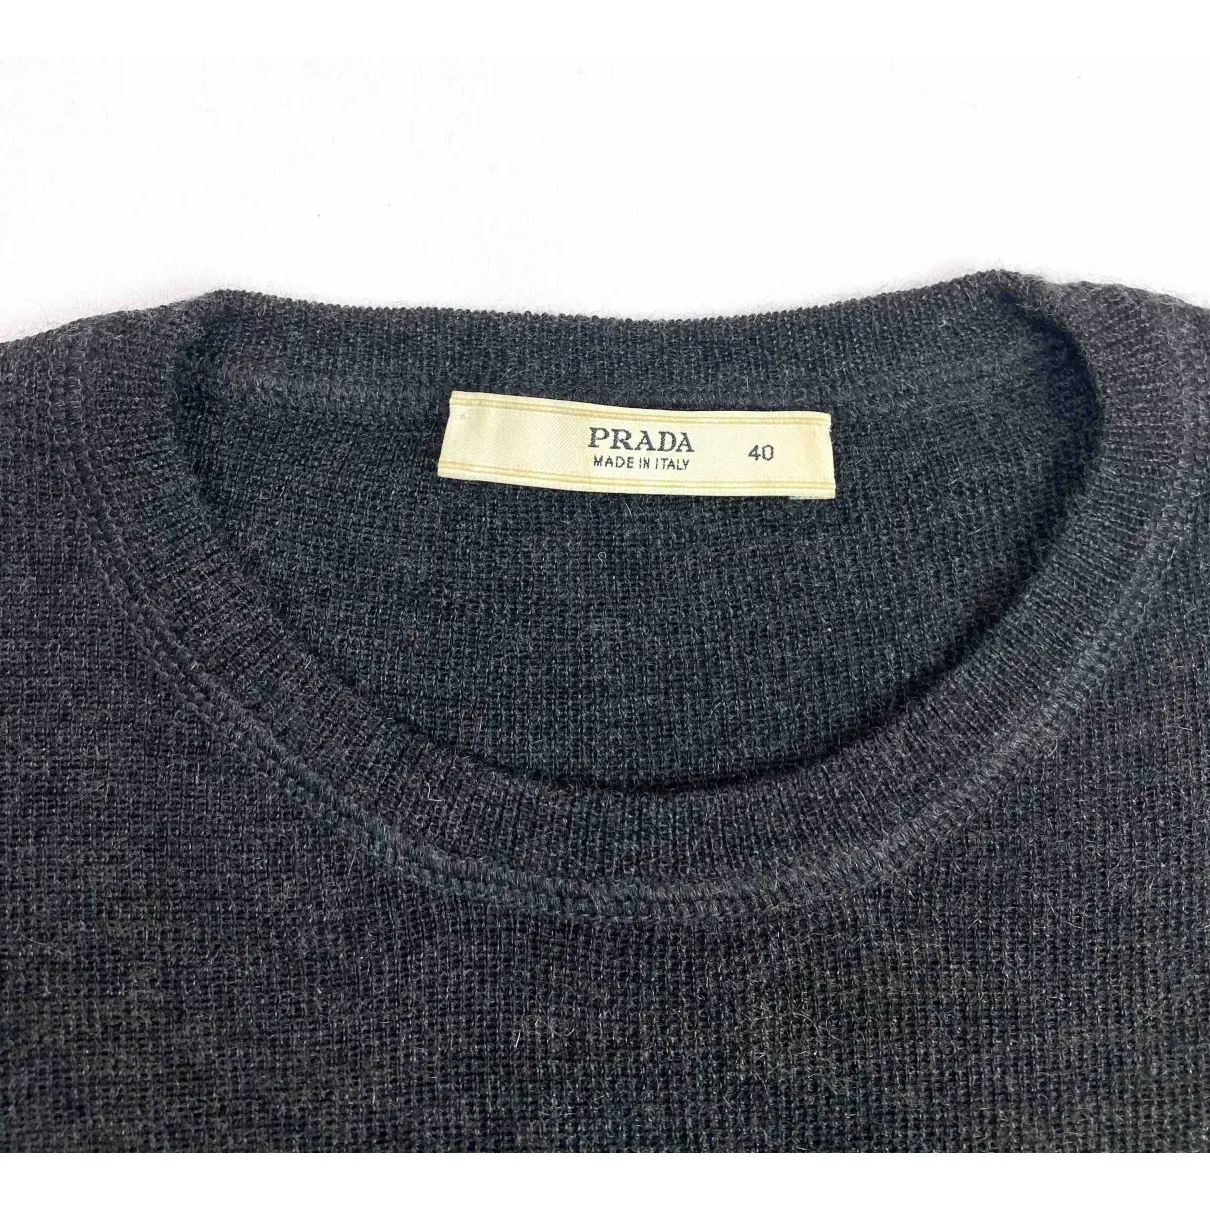 Buy Prada Cashmere sweatshirt online